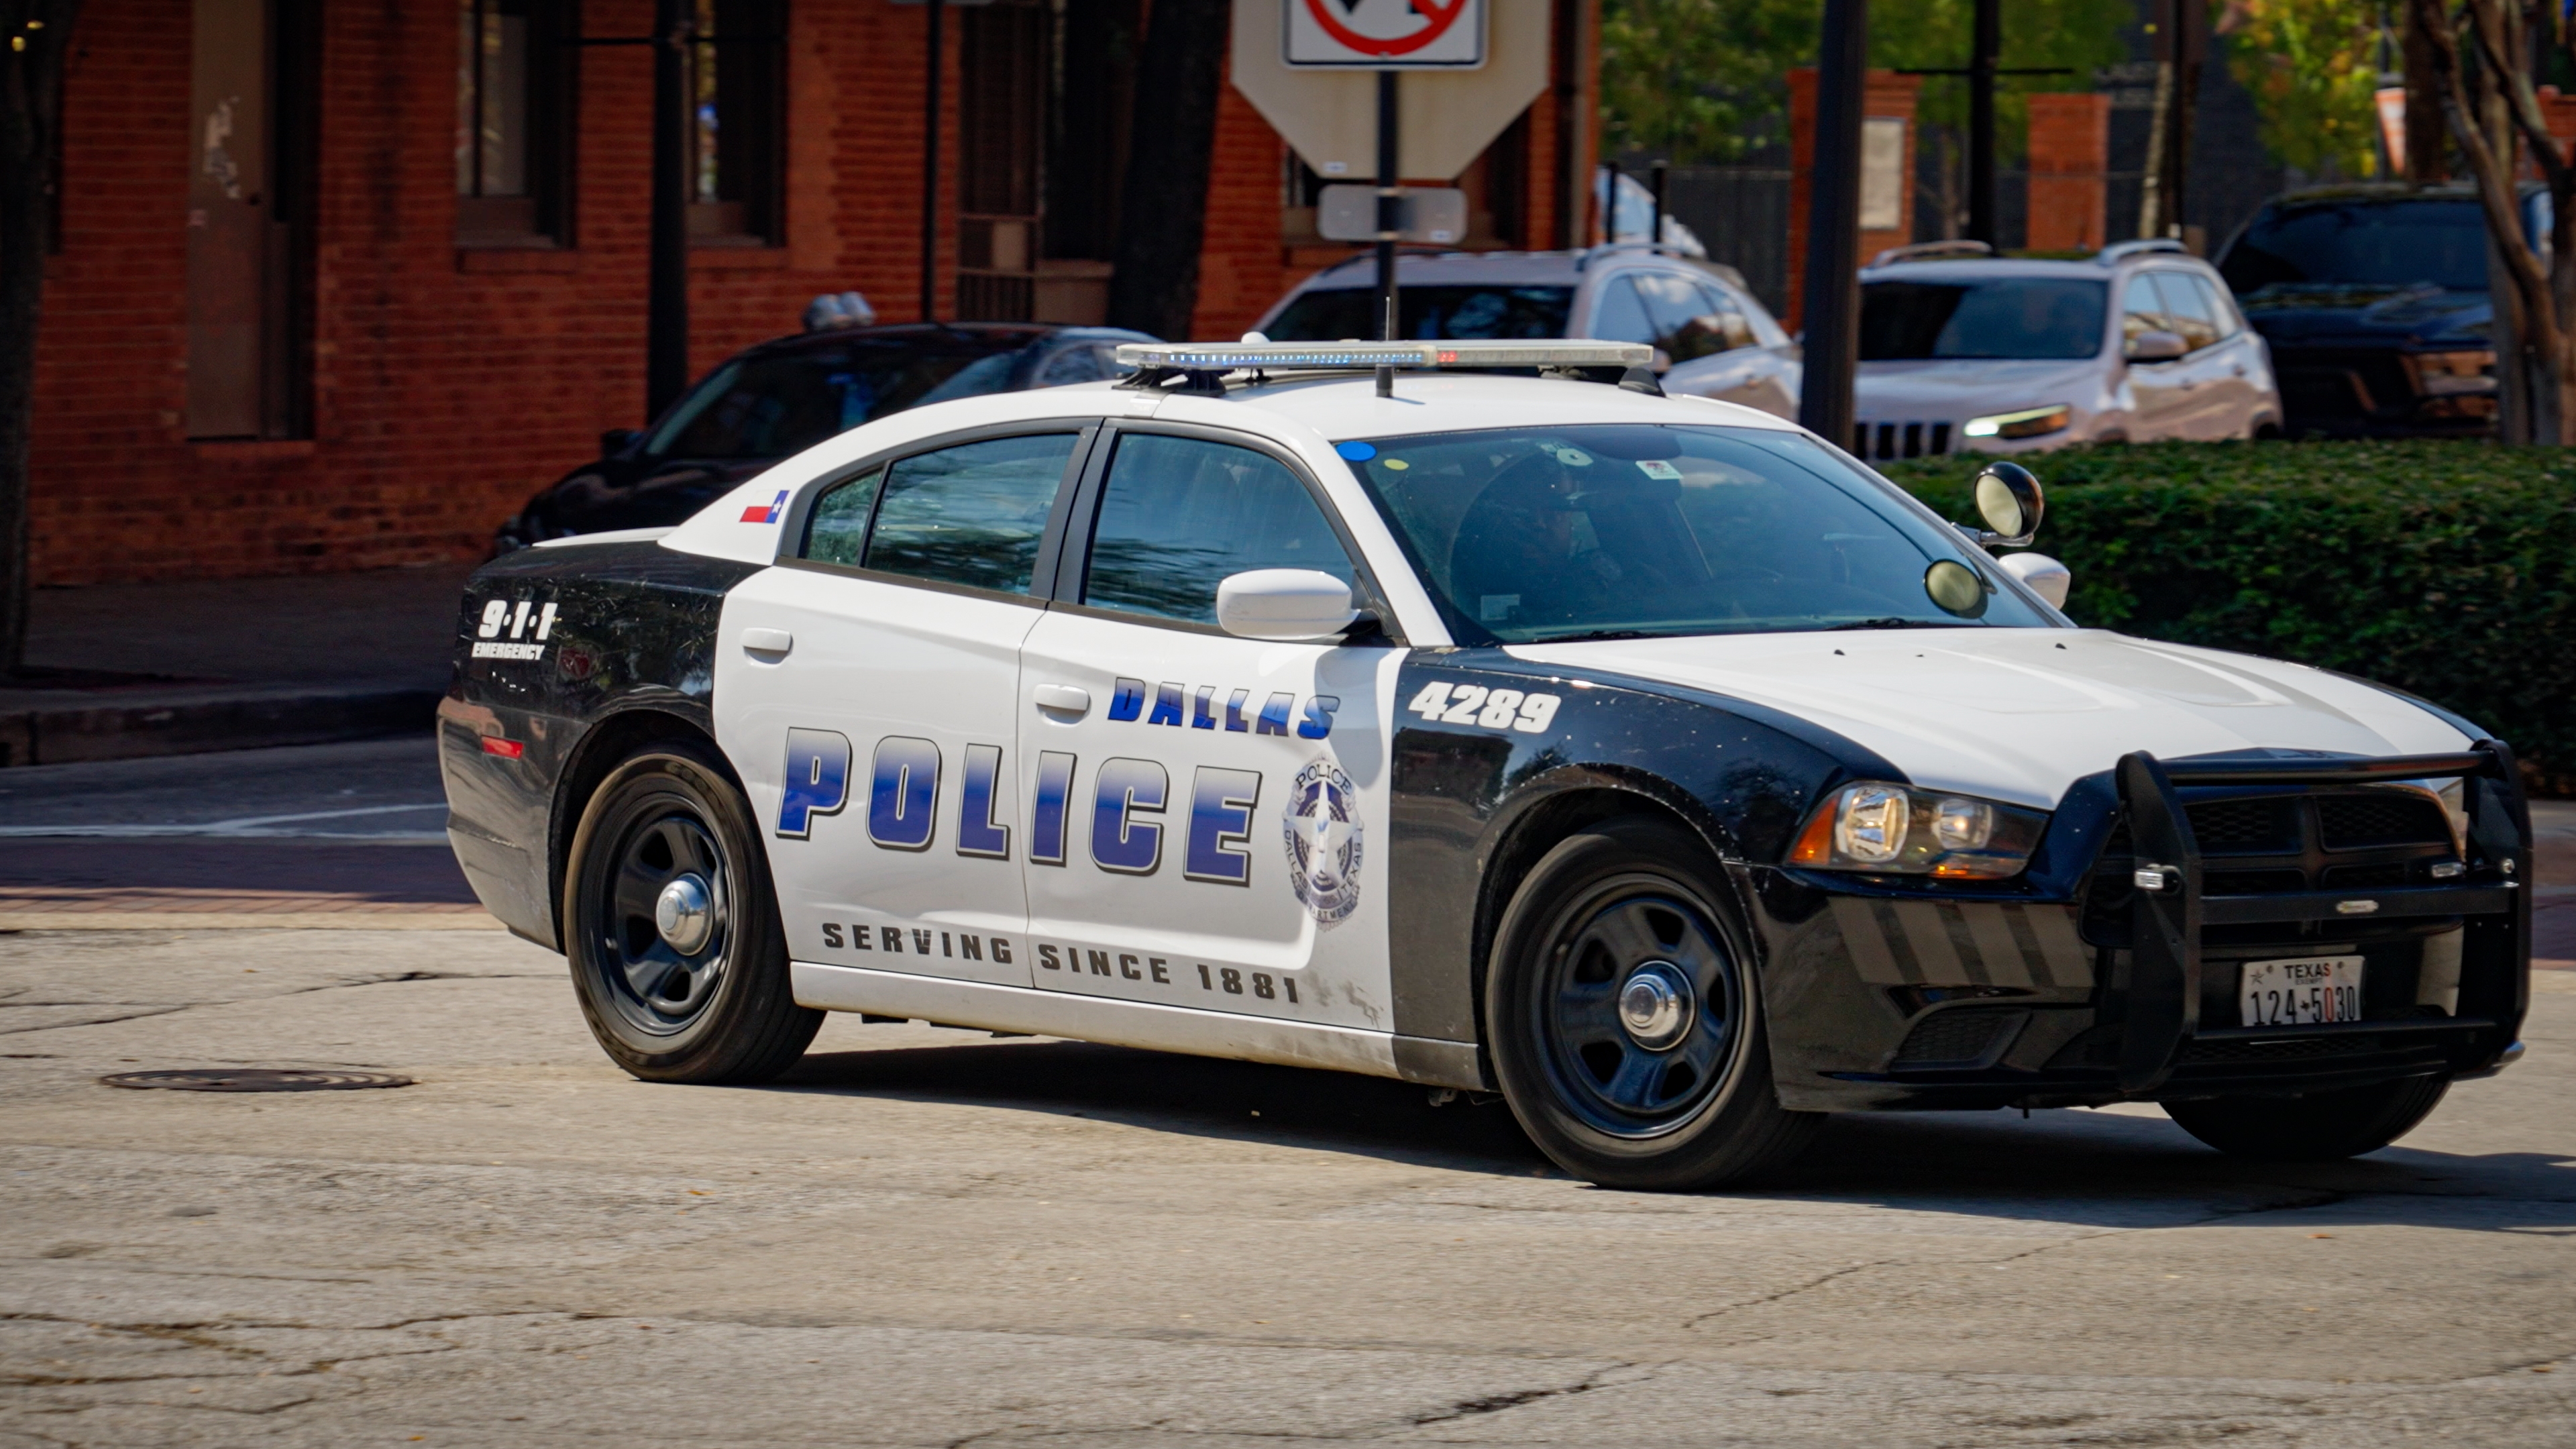 Dallas Police car on duty | Source: Shutterstock.com